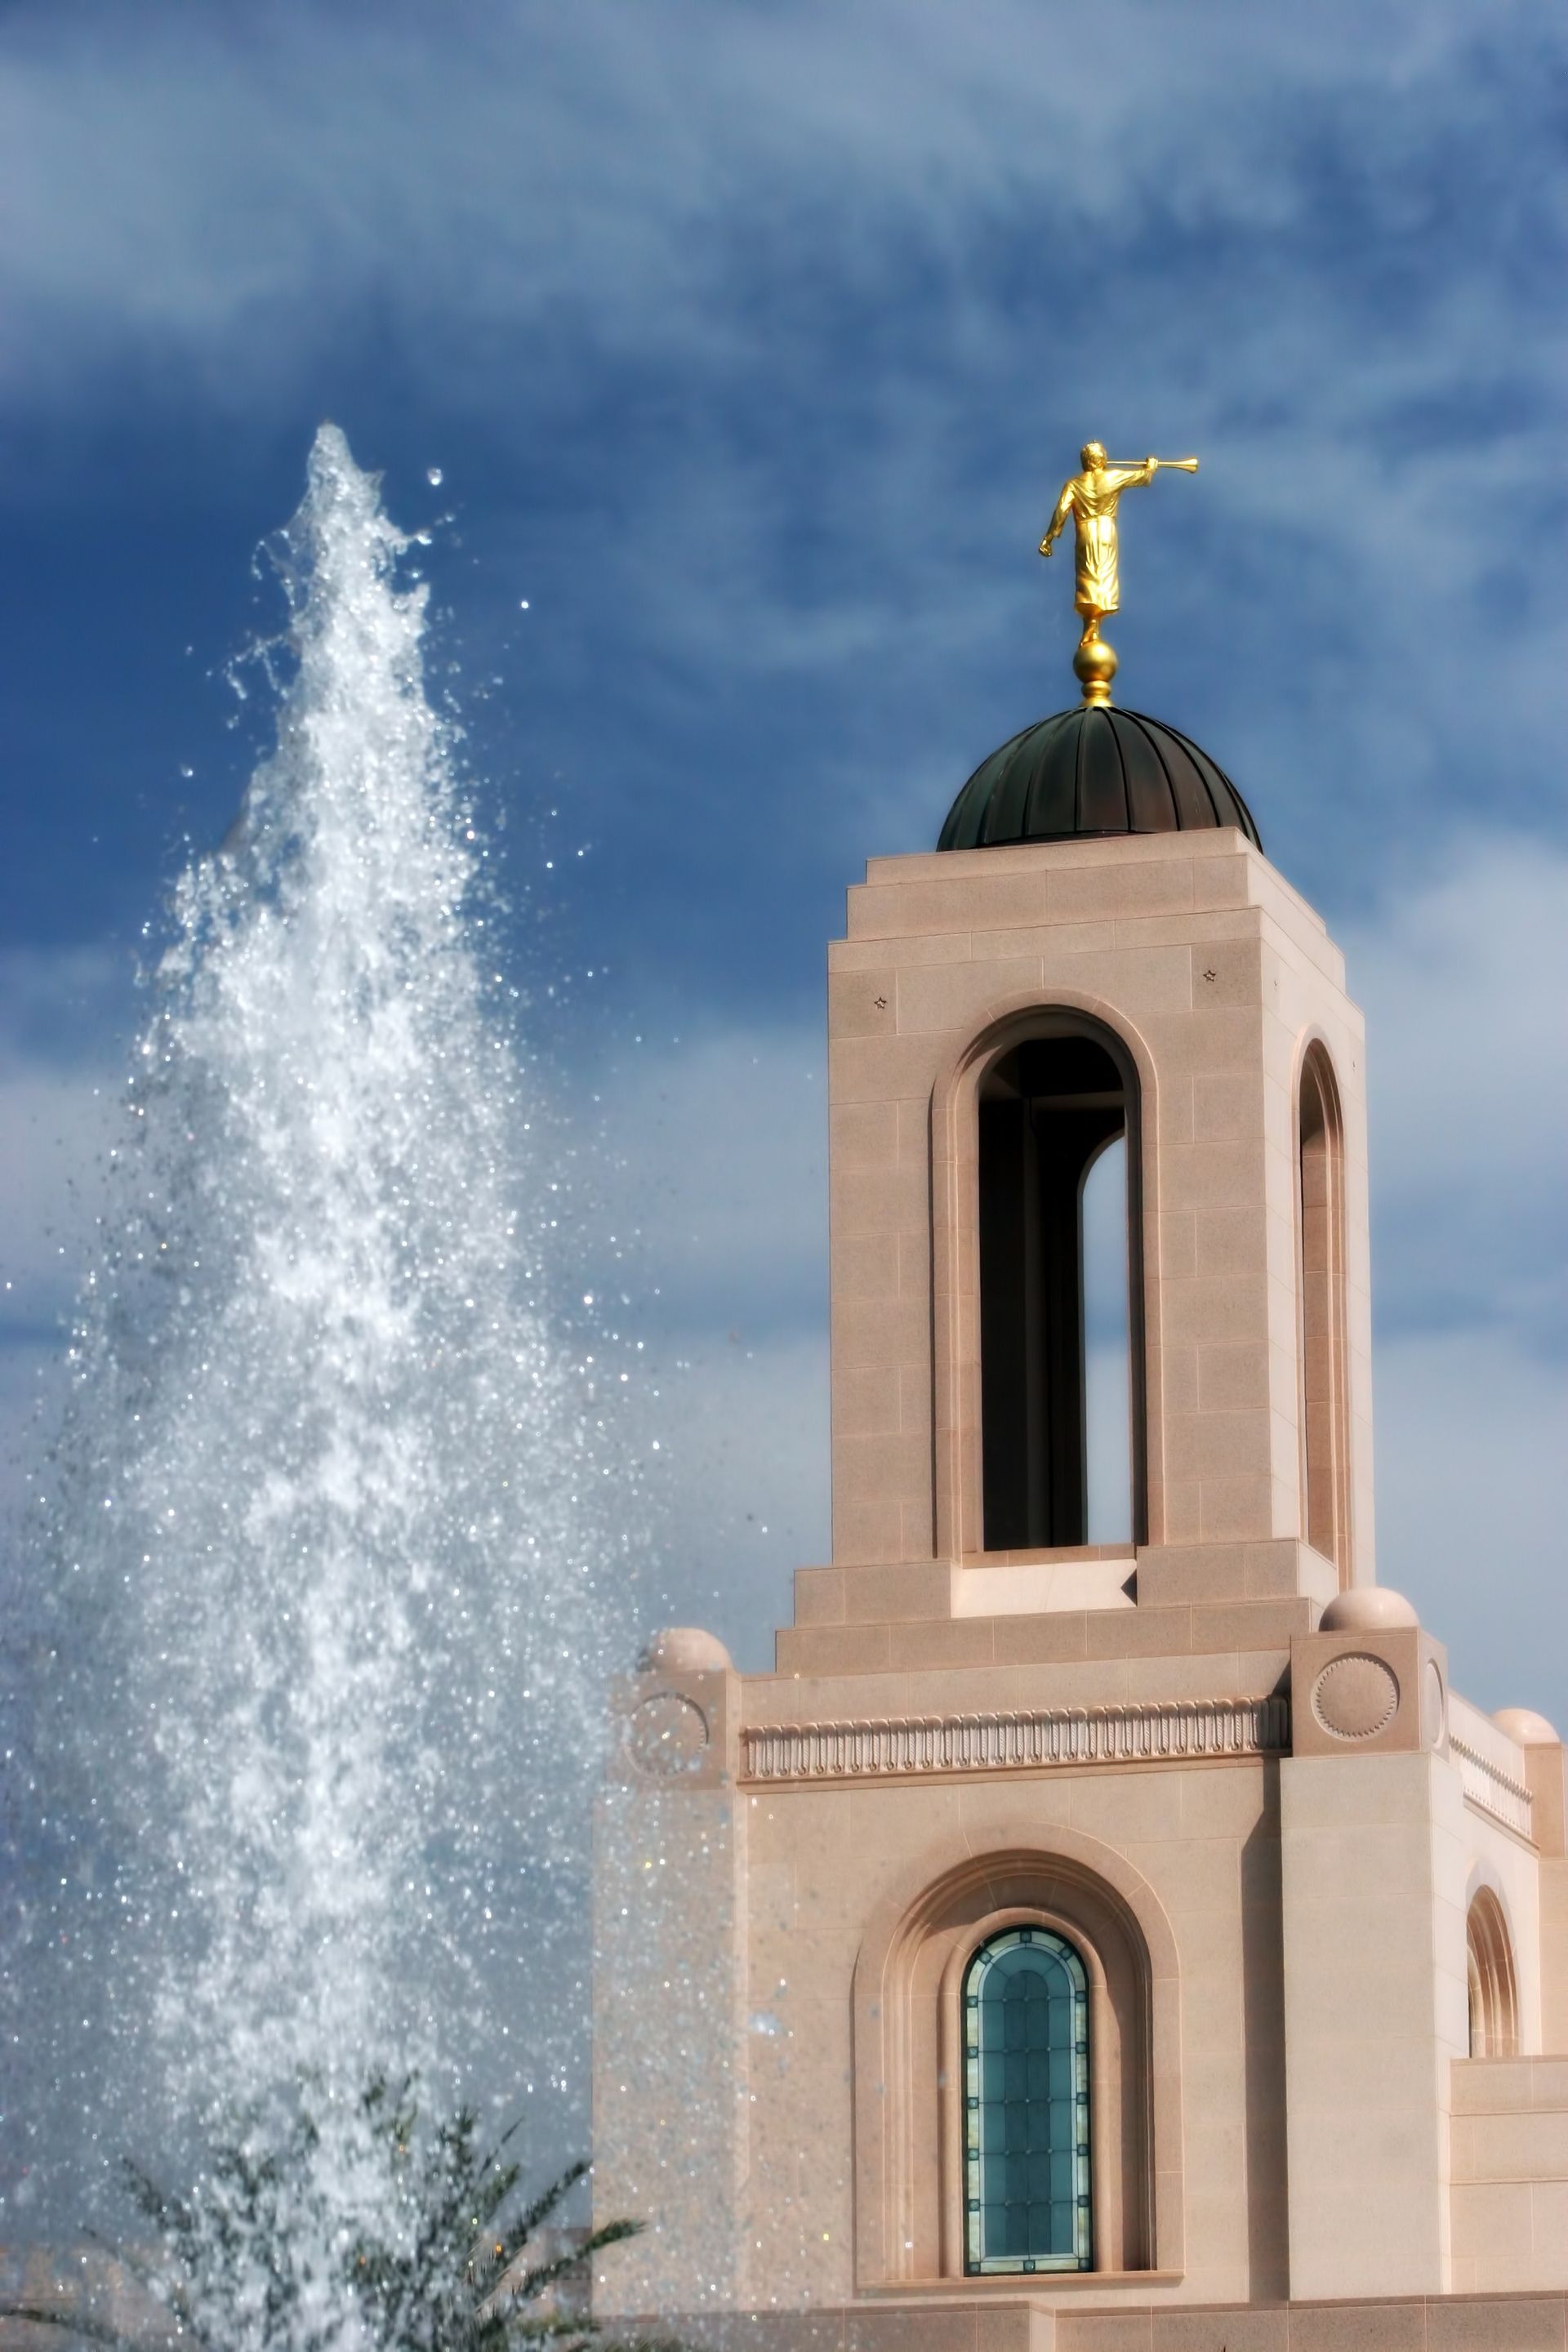 The Newport Beach California Temple spire, including the fountain.